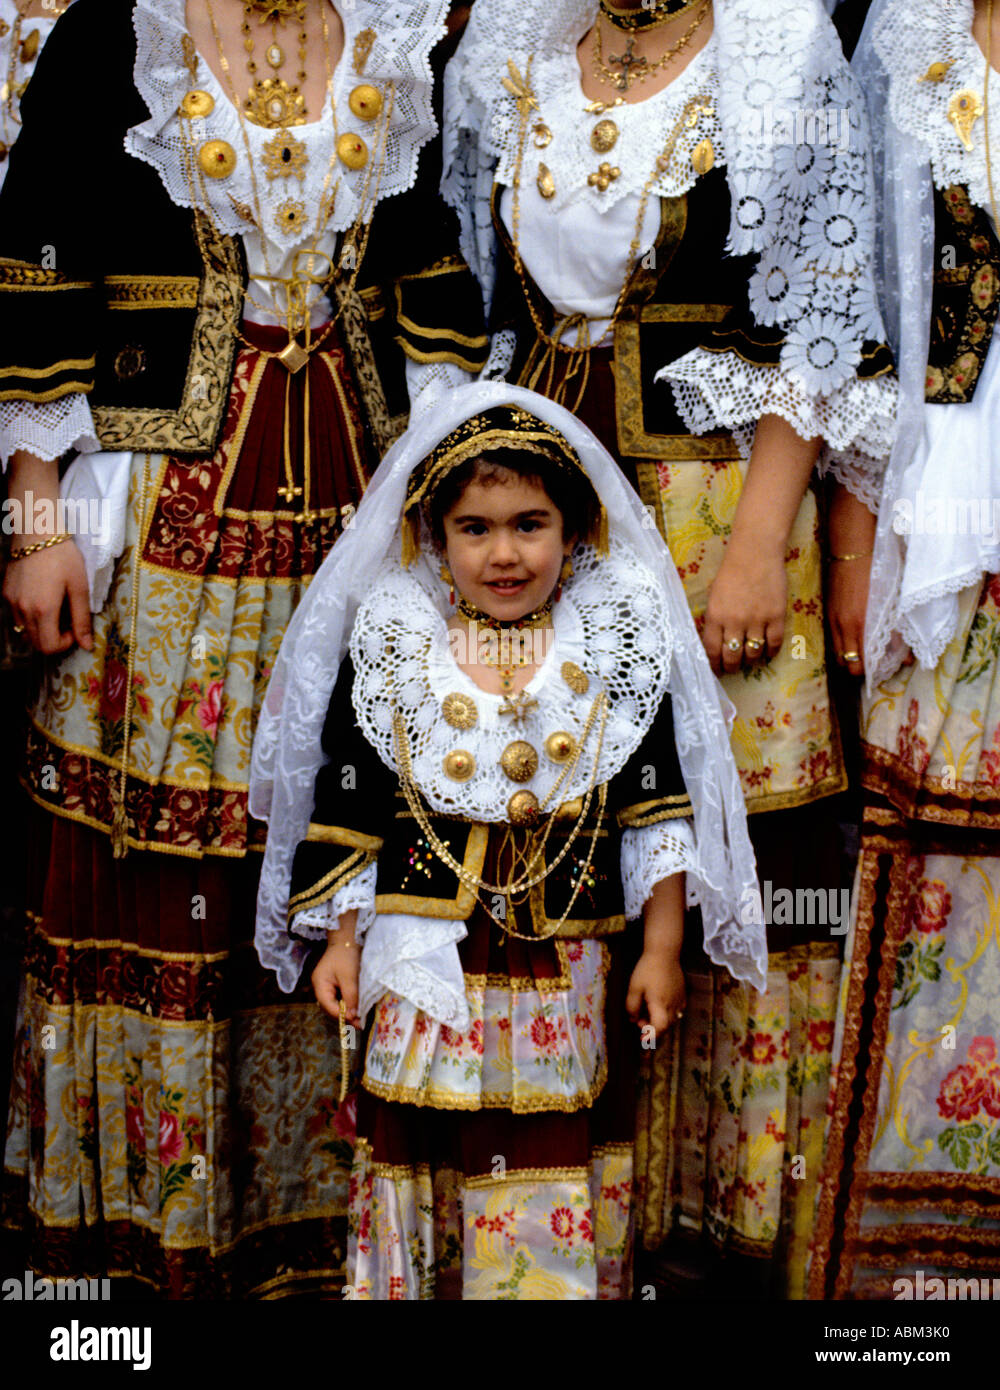 Elaborate traditional costumes are worn by local people at Cavalcata Sarda annual  festival parade in Sassari,Sardinia,Italy Stock Photo